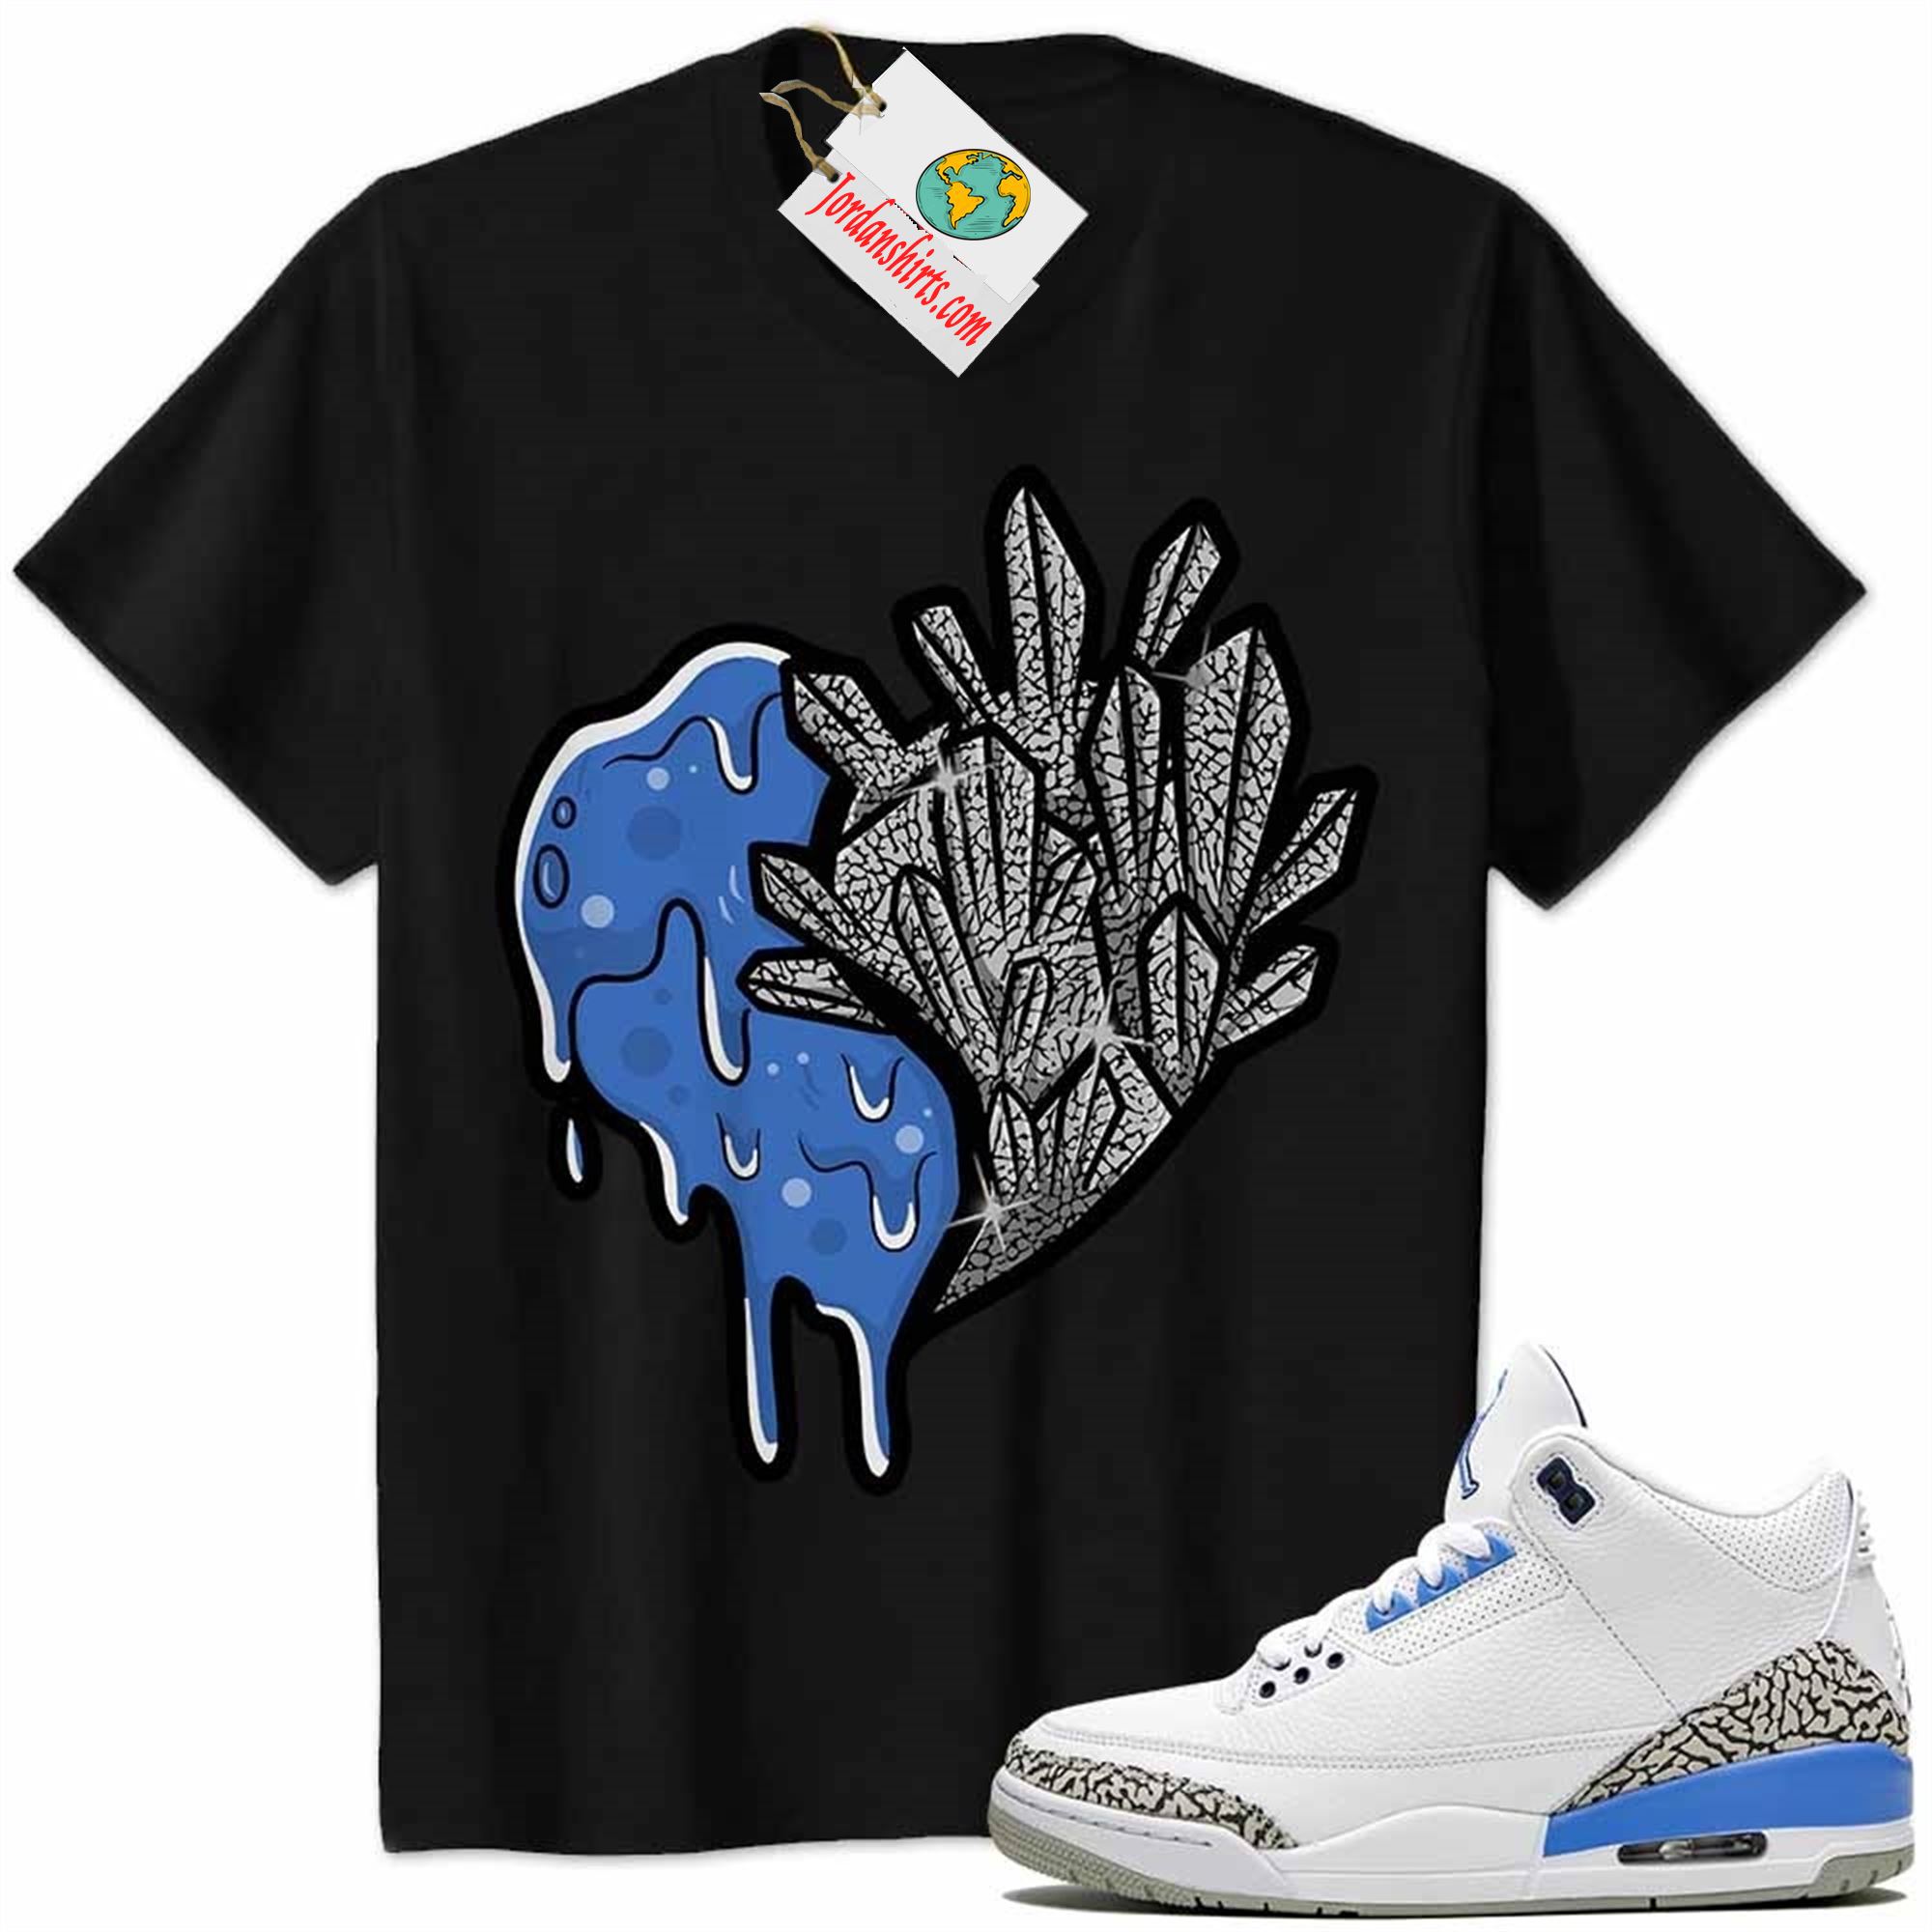 Jordan 3 Shirt, Crystal And Melt Heart Black Air Jordan 3 Unc 3s Plus Size Up To 5xl